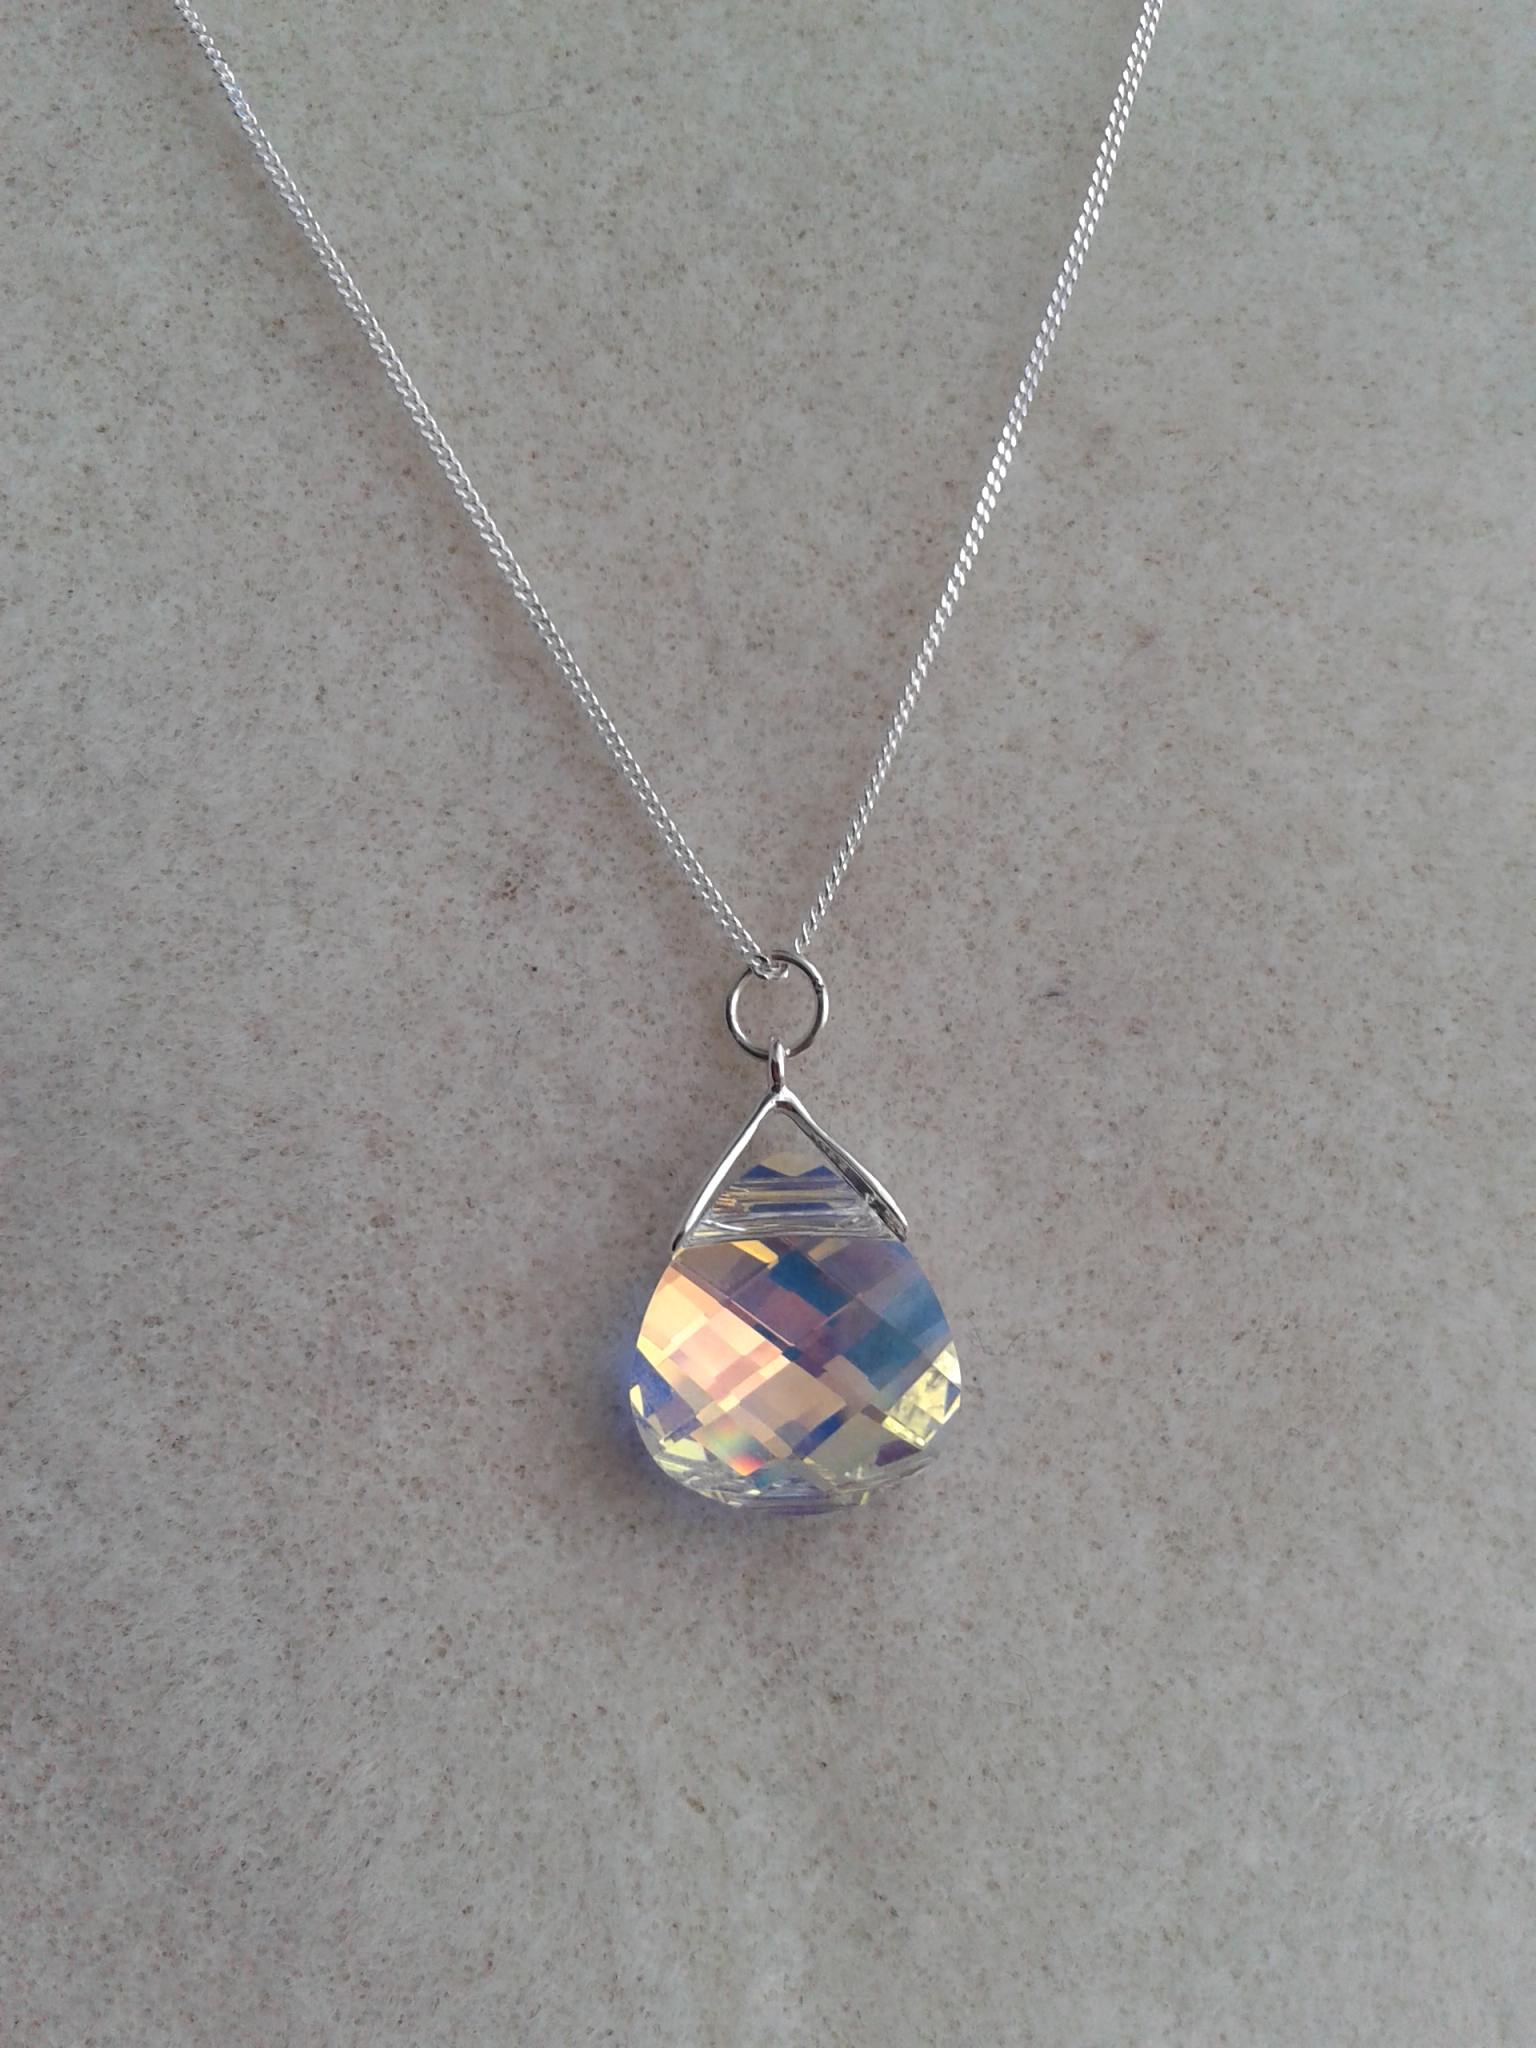 Rainbow Moonstone pendant necklace sterling silver 925 - Moonchild